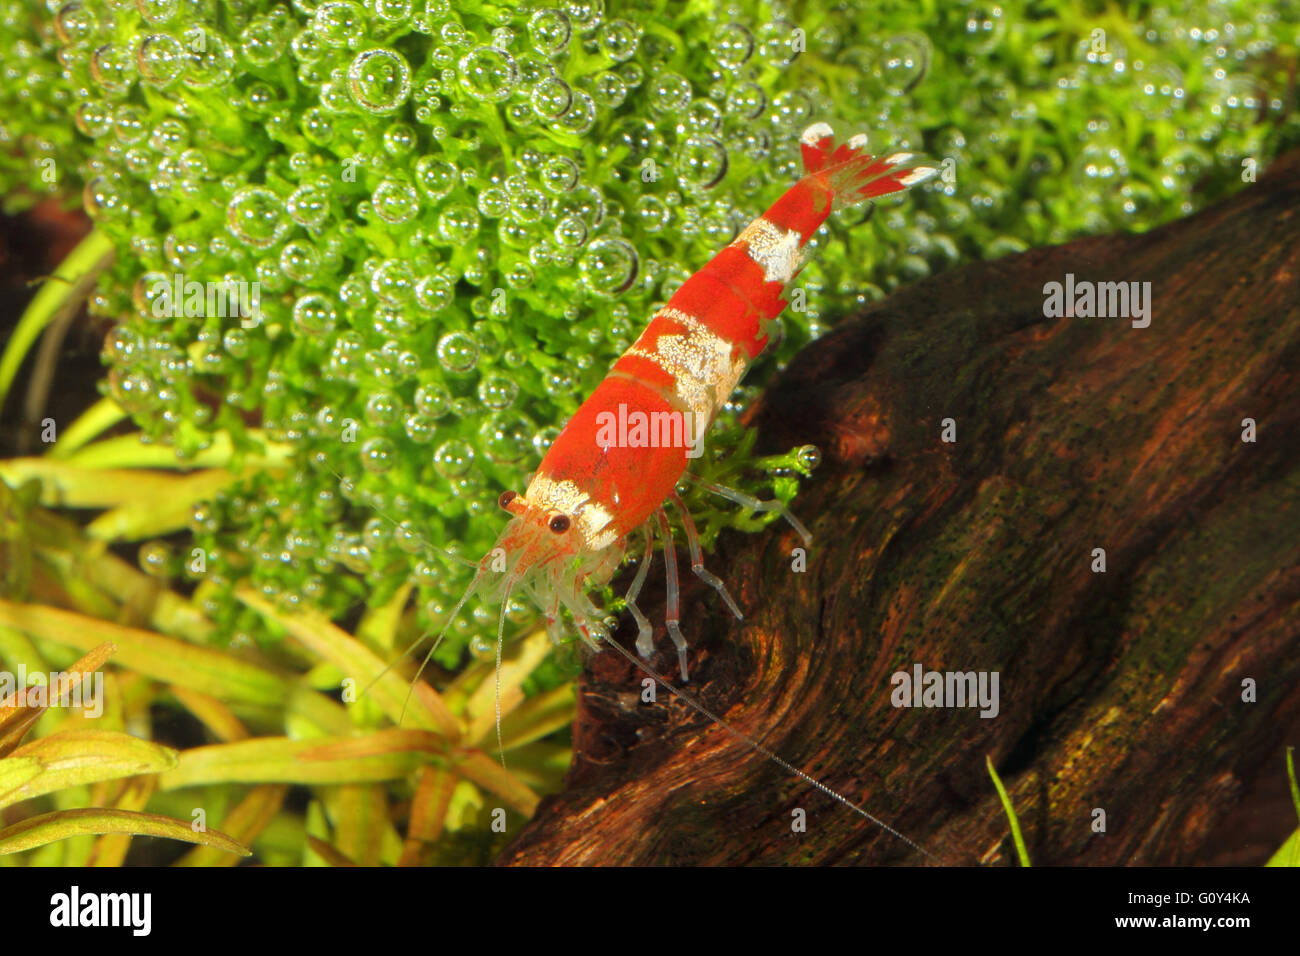 Crystal red Garnelen, rote Bienengarnele, Caridina Cantonensis im Hause Süßwasseraquarium Emiliano Spada vgl. Stockfoto